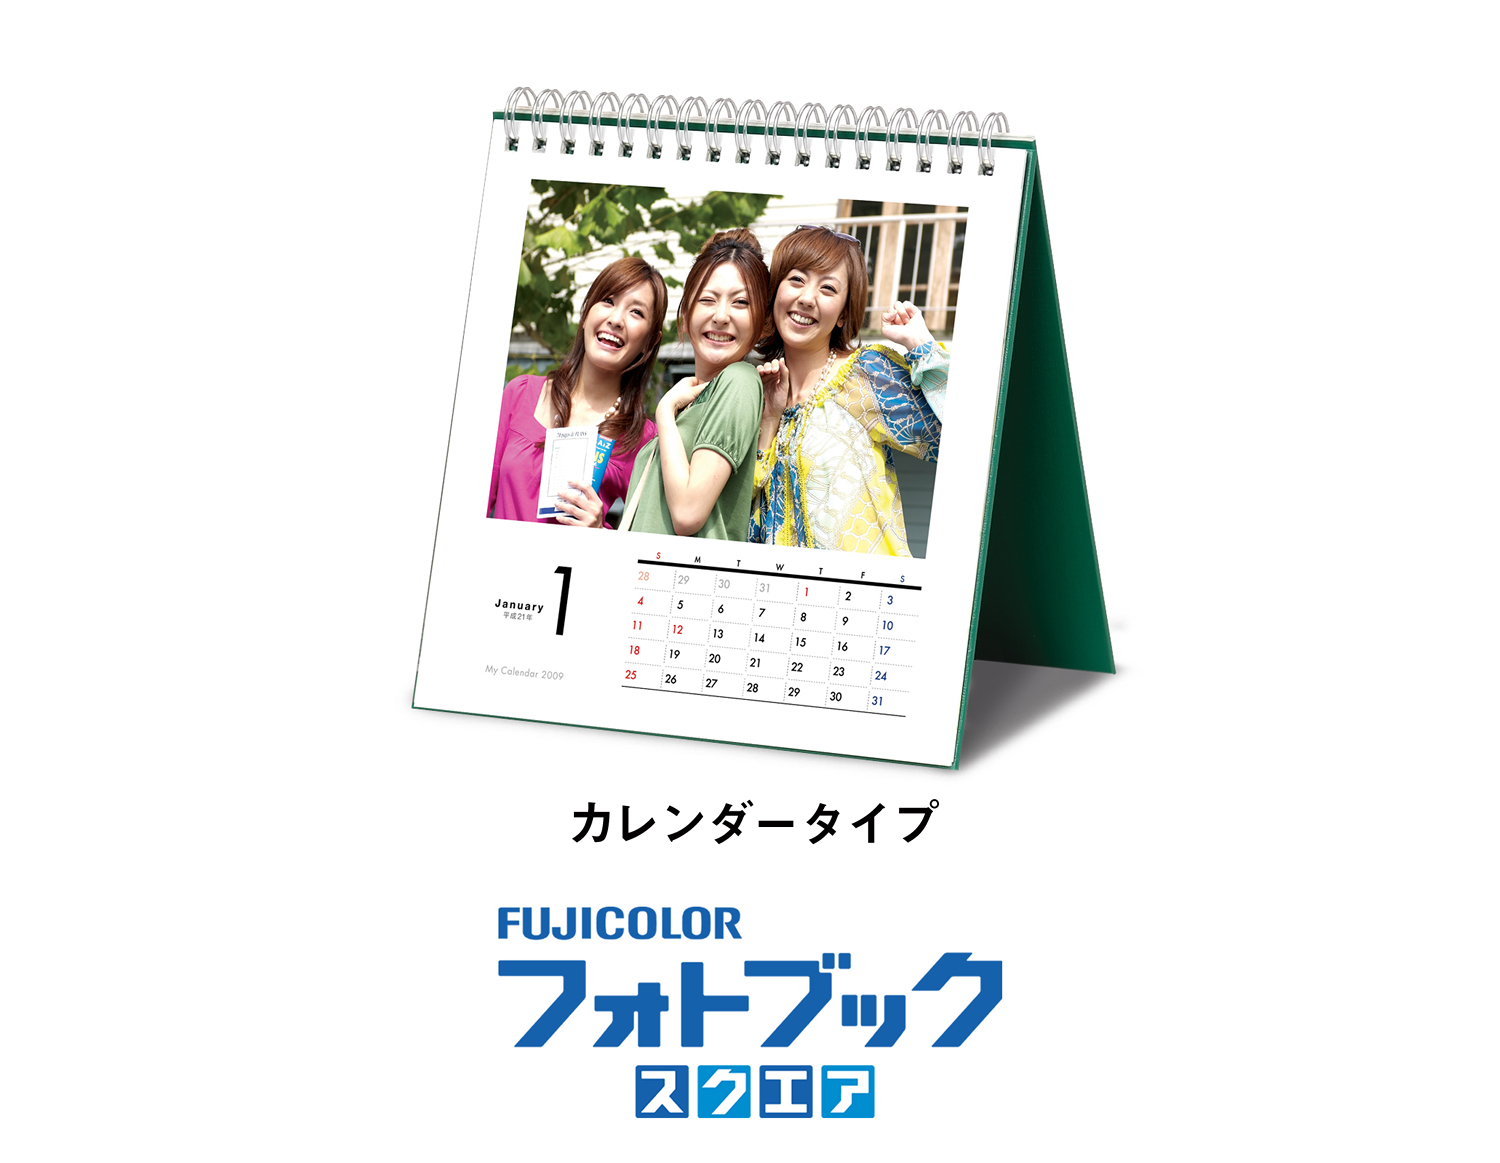 Fujifilm 企業情報 ニュースリリース News用画像データ